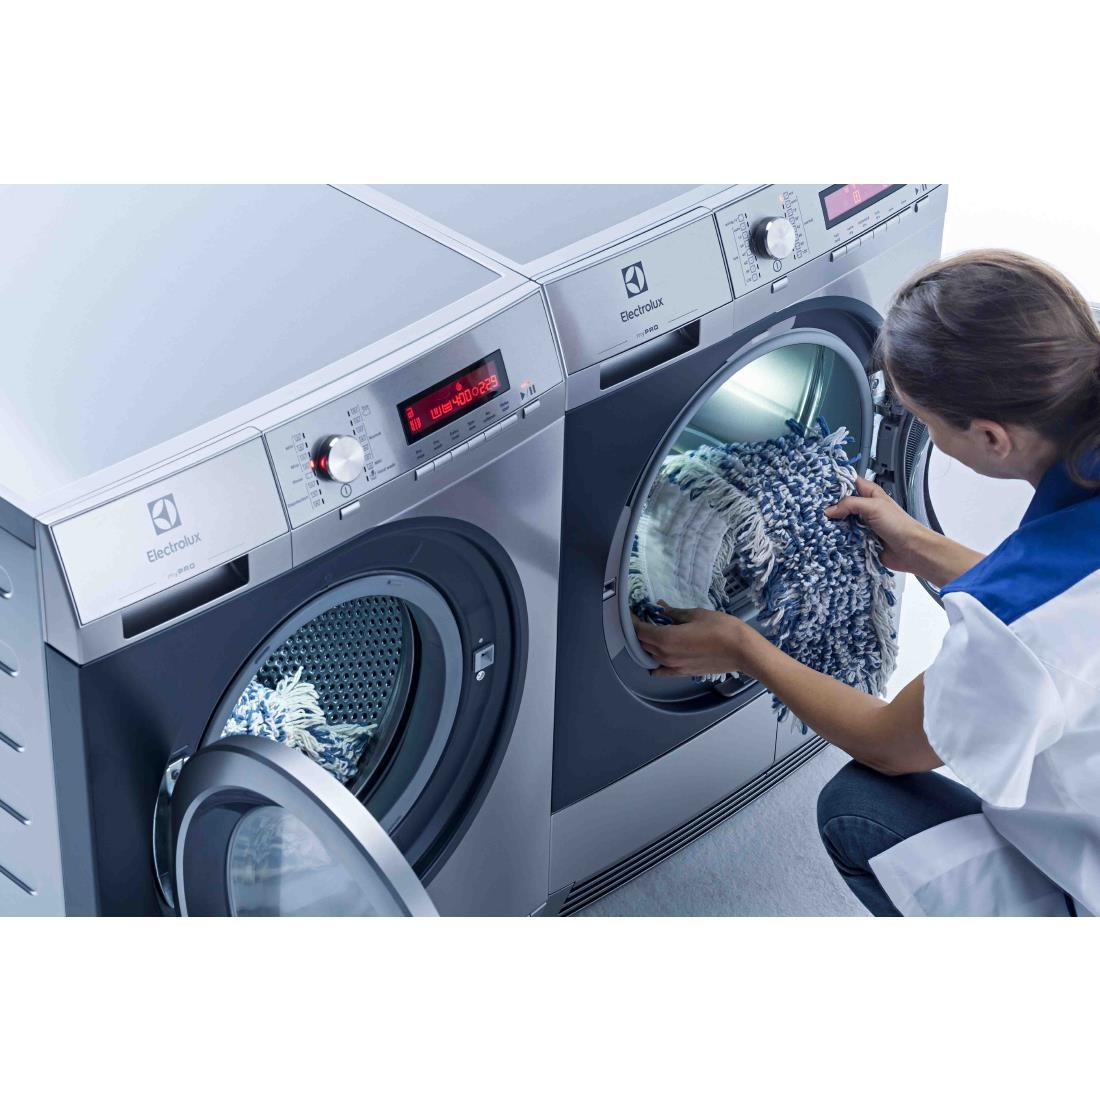 Electrolux myPRO Commercial Tumble Dryer TE1120 - CK376  - 5